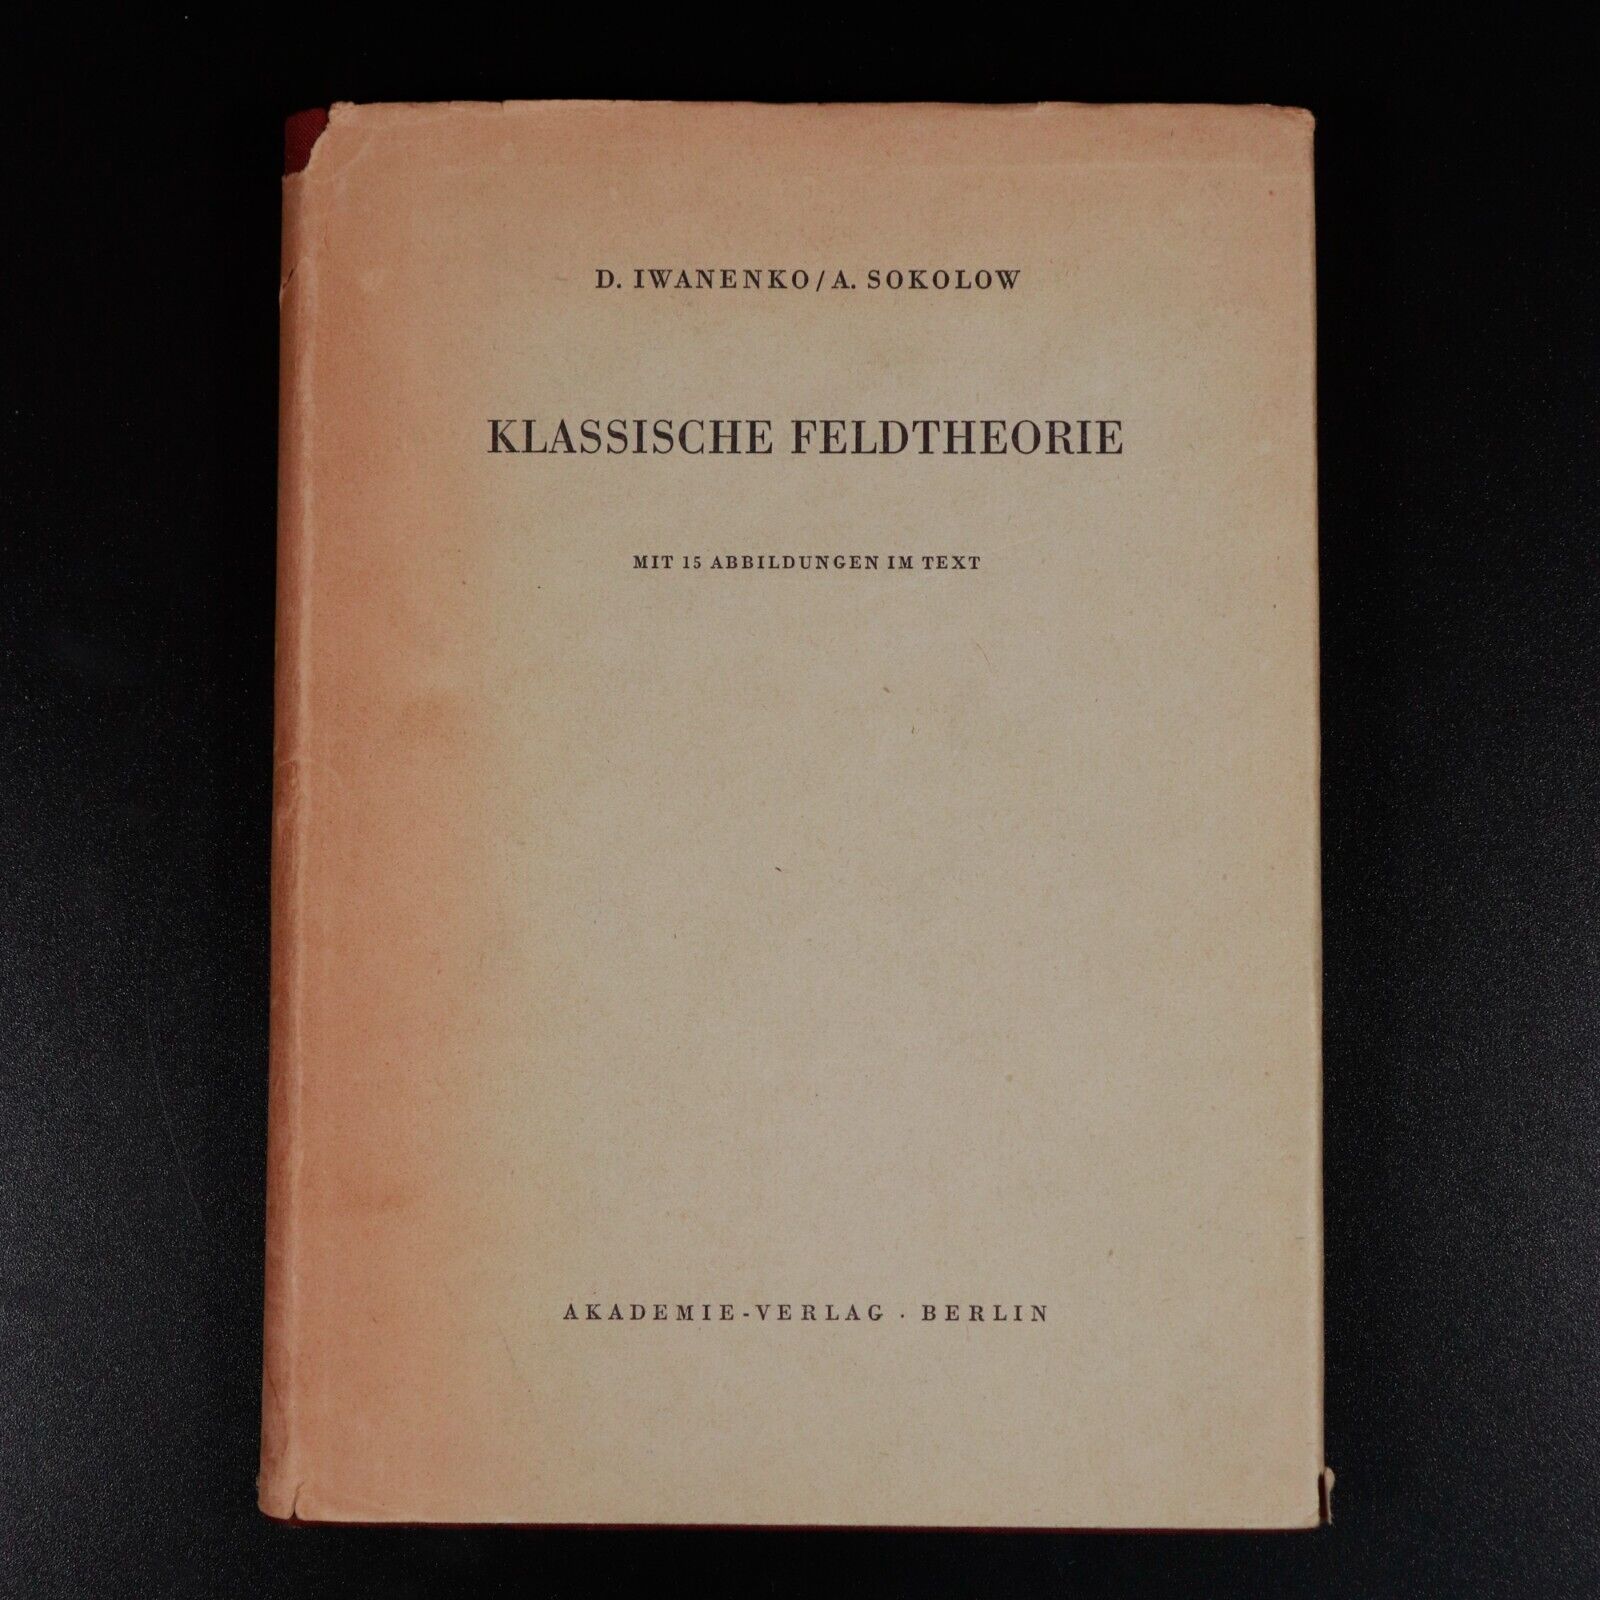 1953 Klassische Feldtheorie by D. Iwanenko & A. Sokolow Vintage Science Book